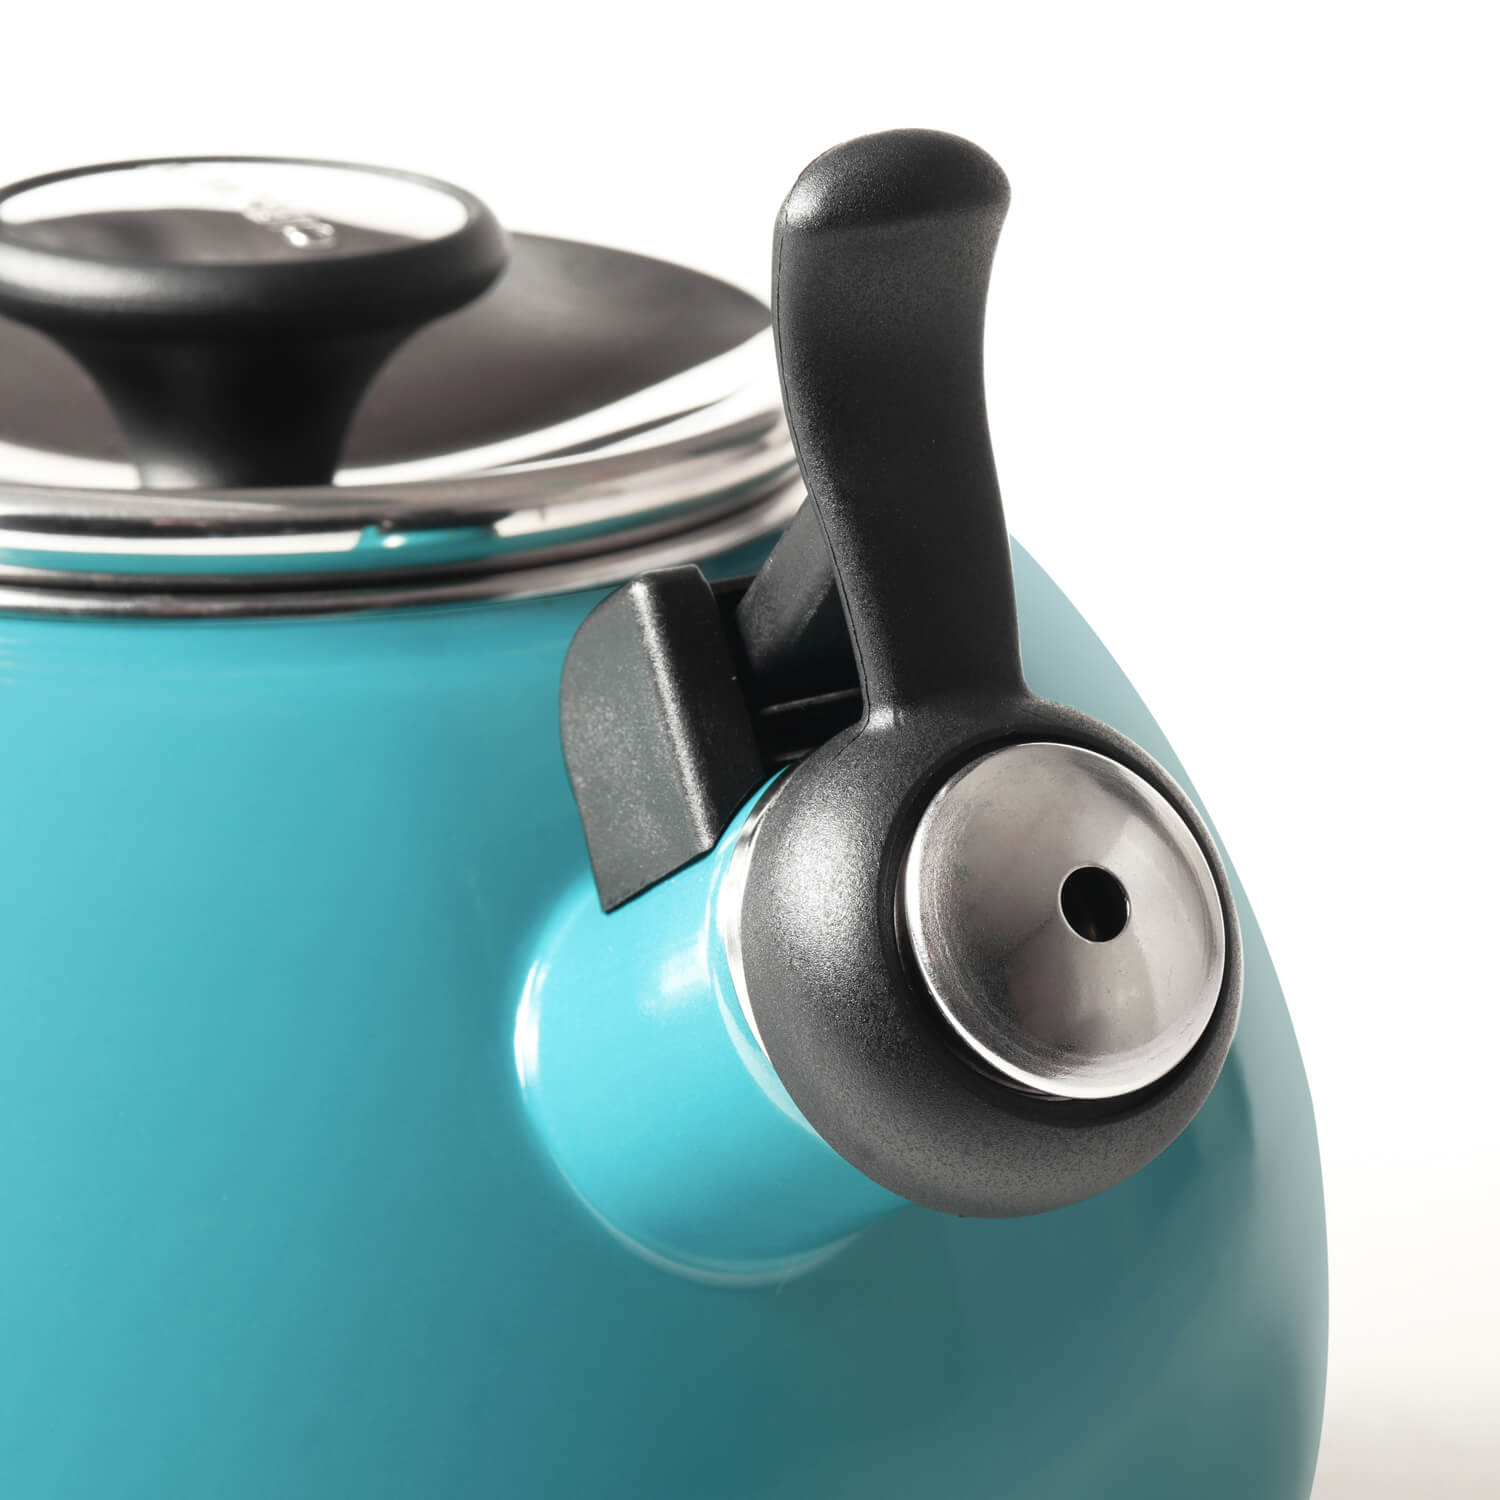 Circulon Enamel On Steel Whistling Tea Kettle 1.9 Liters, Turquoise